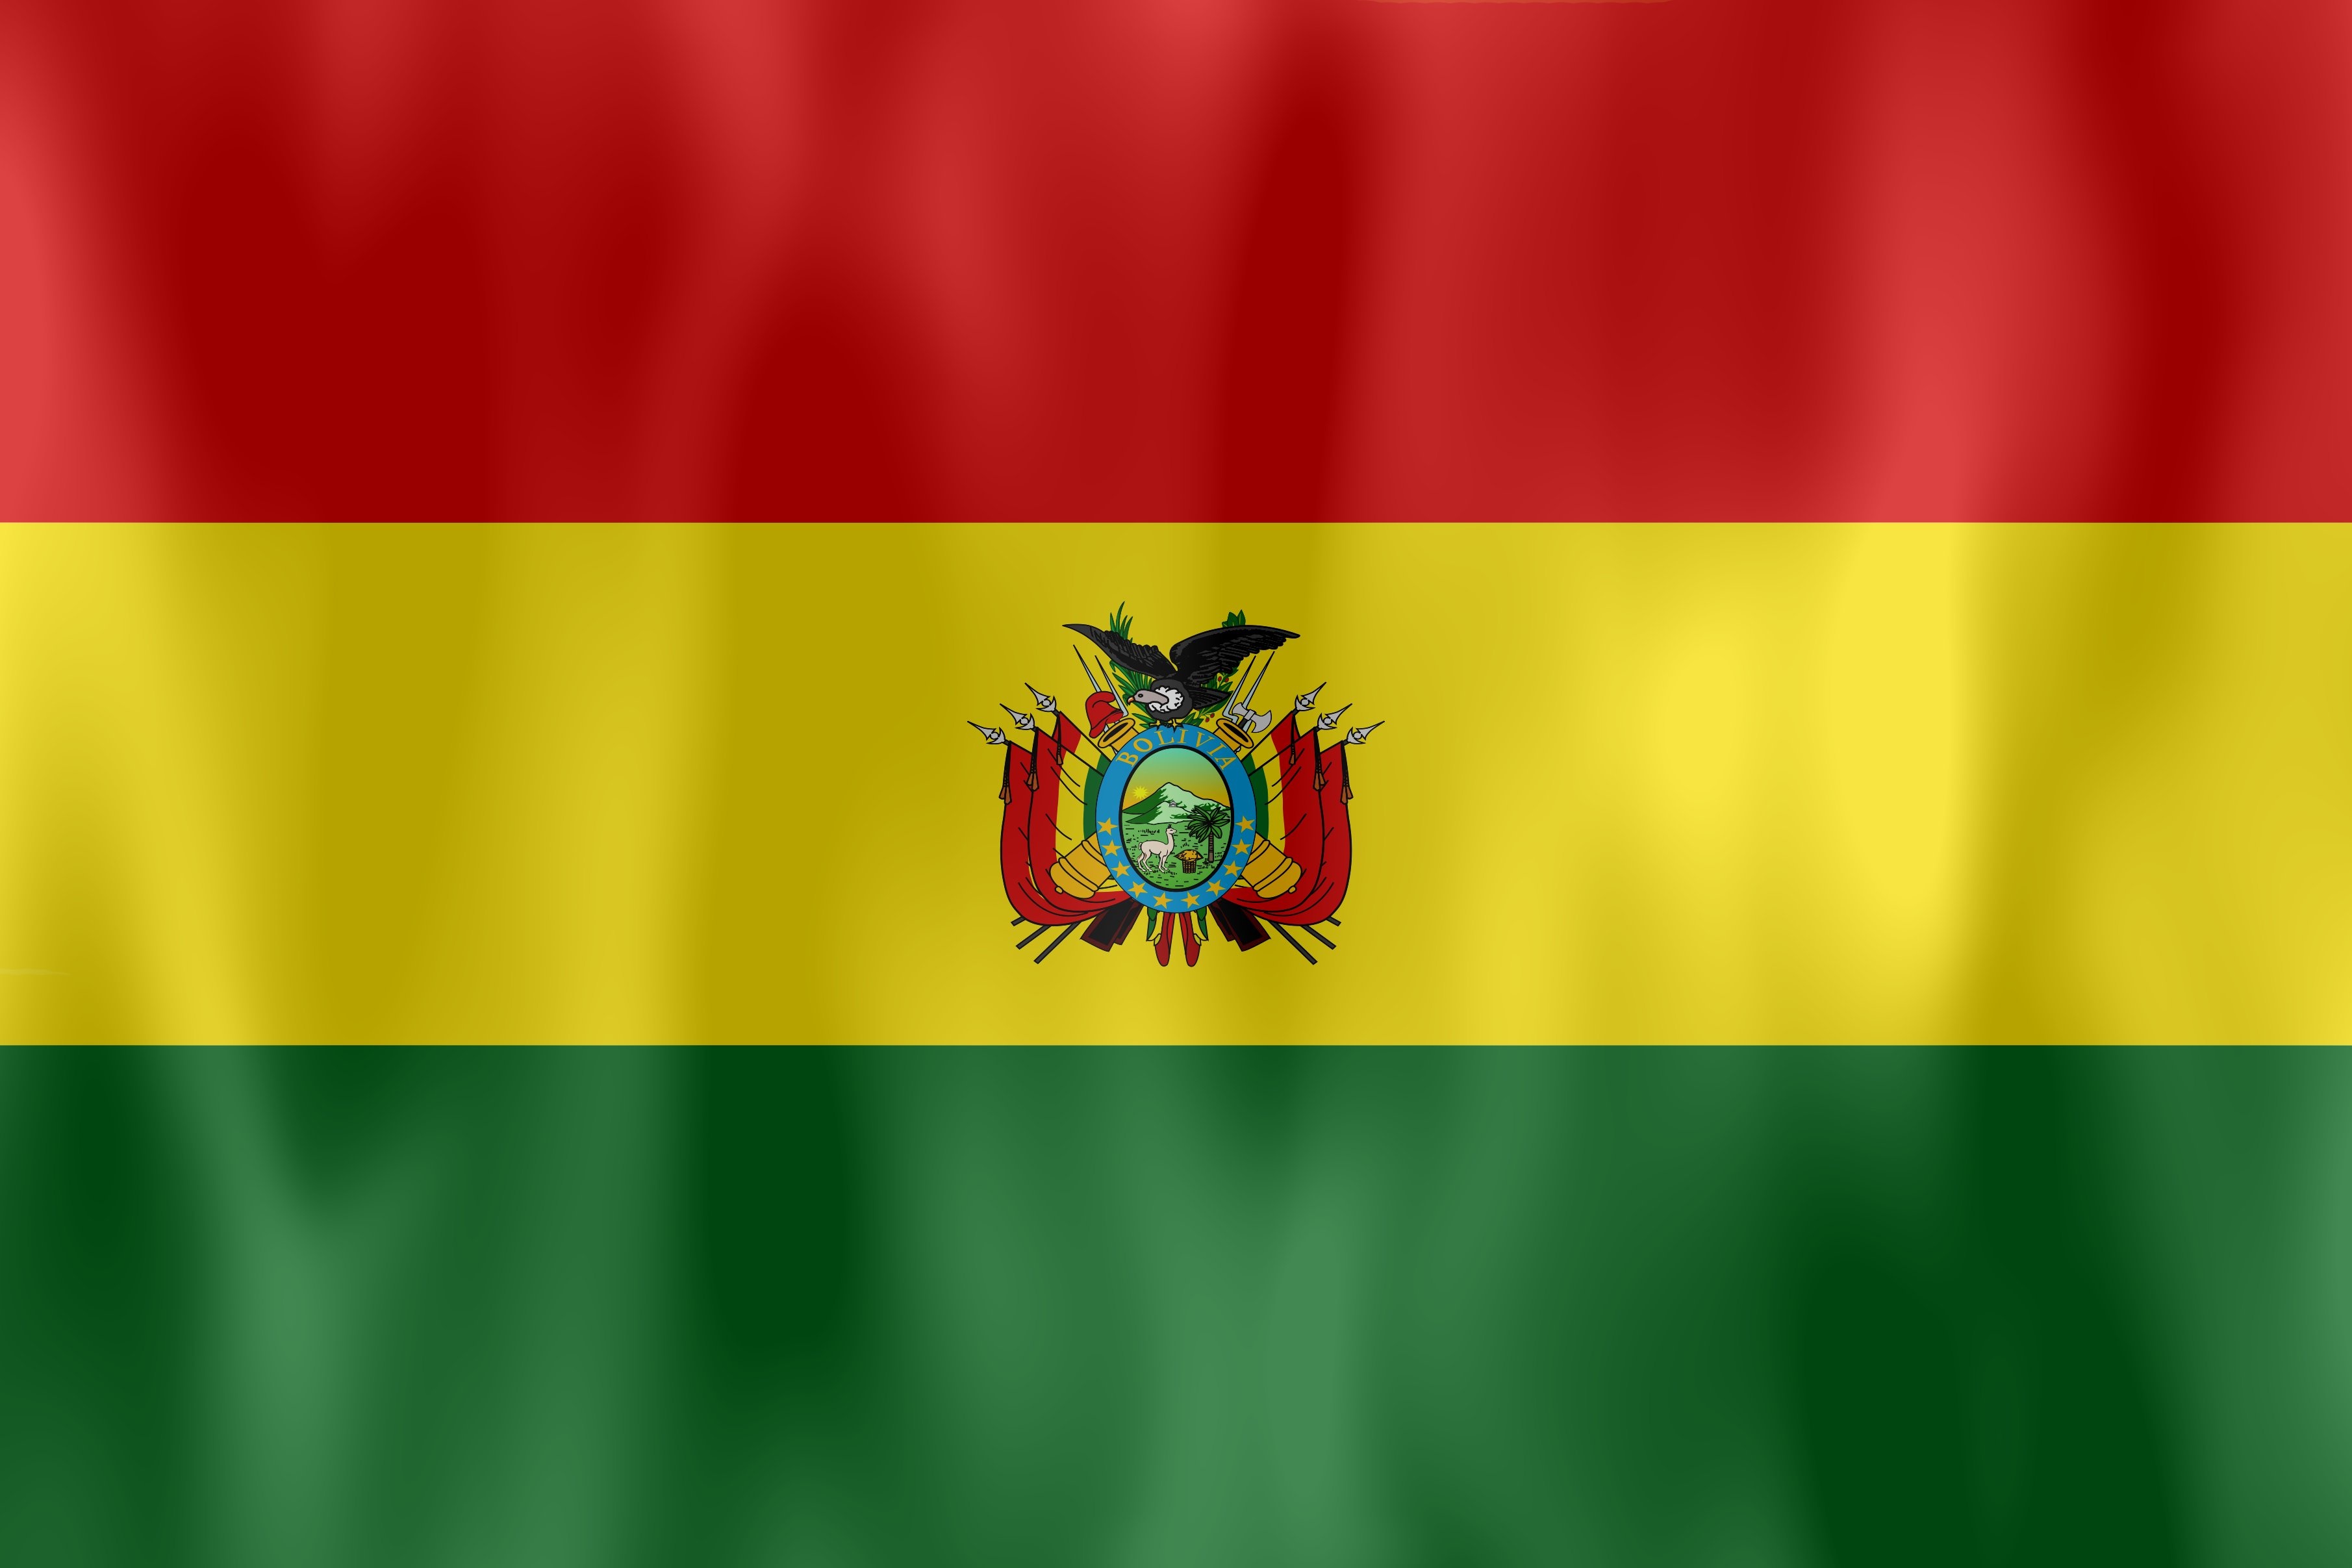 flag-of-bolivia-symbol-of-prosperity-and-values-facts-ima